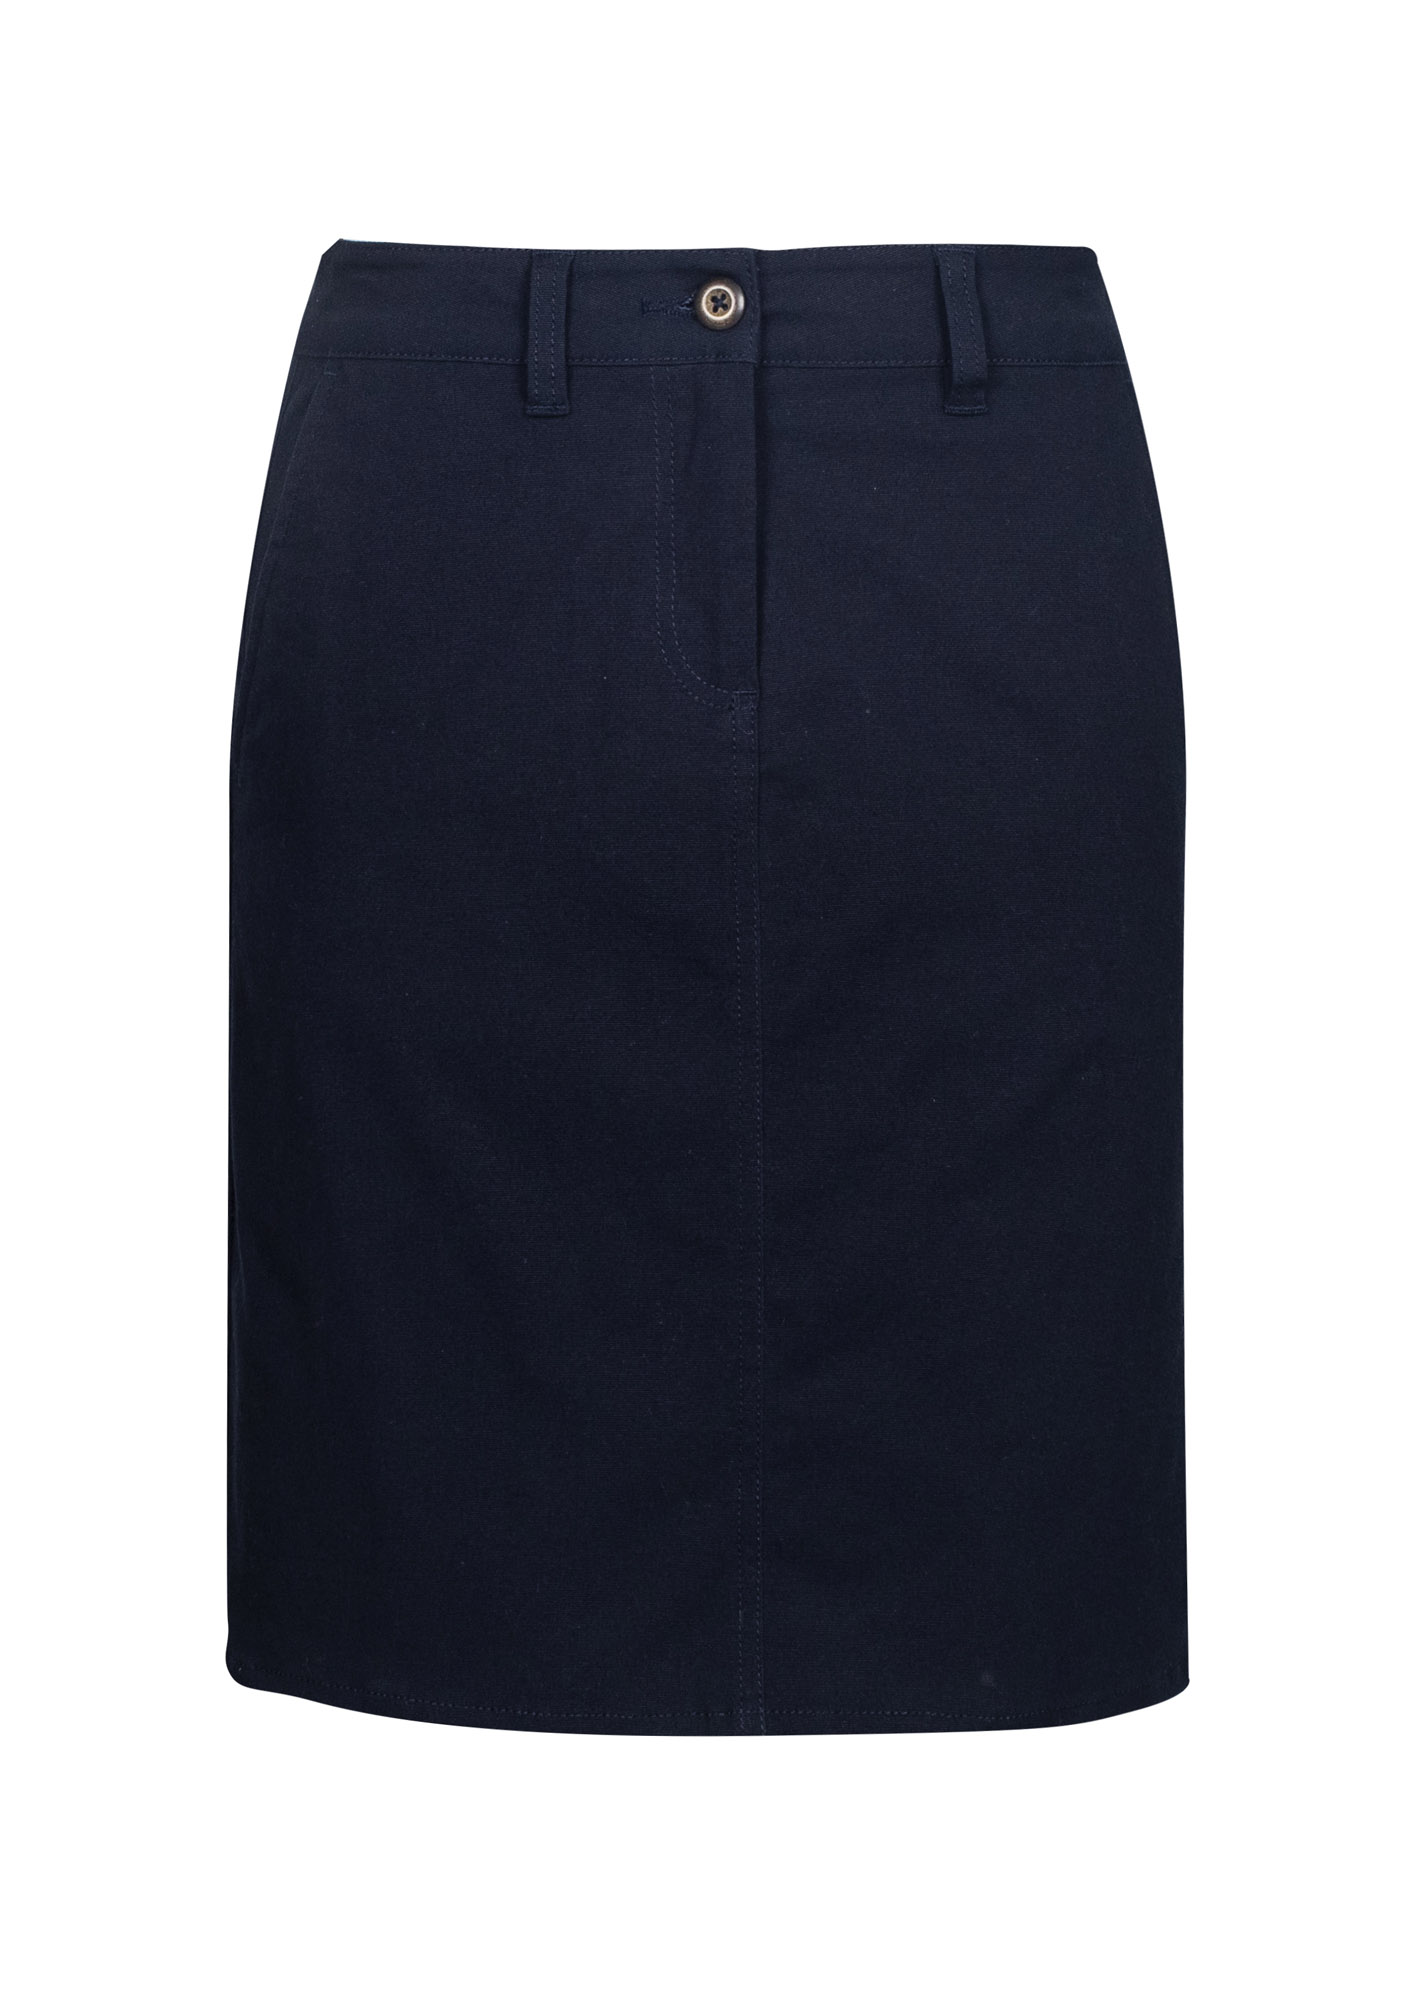 Women's Lawson Chino Skirt - Navy - Uniform Edit